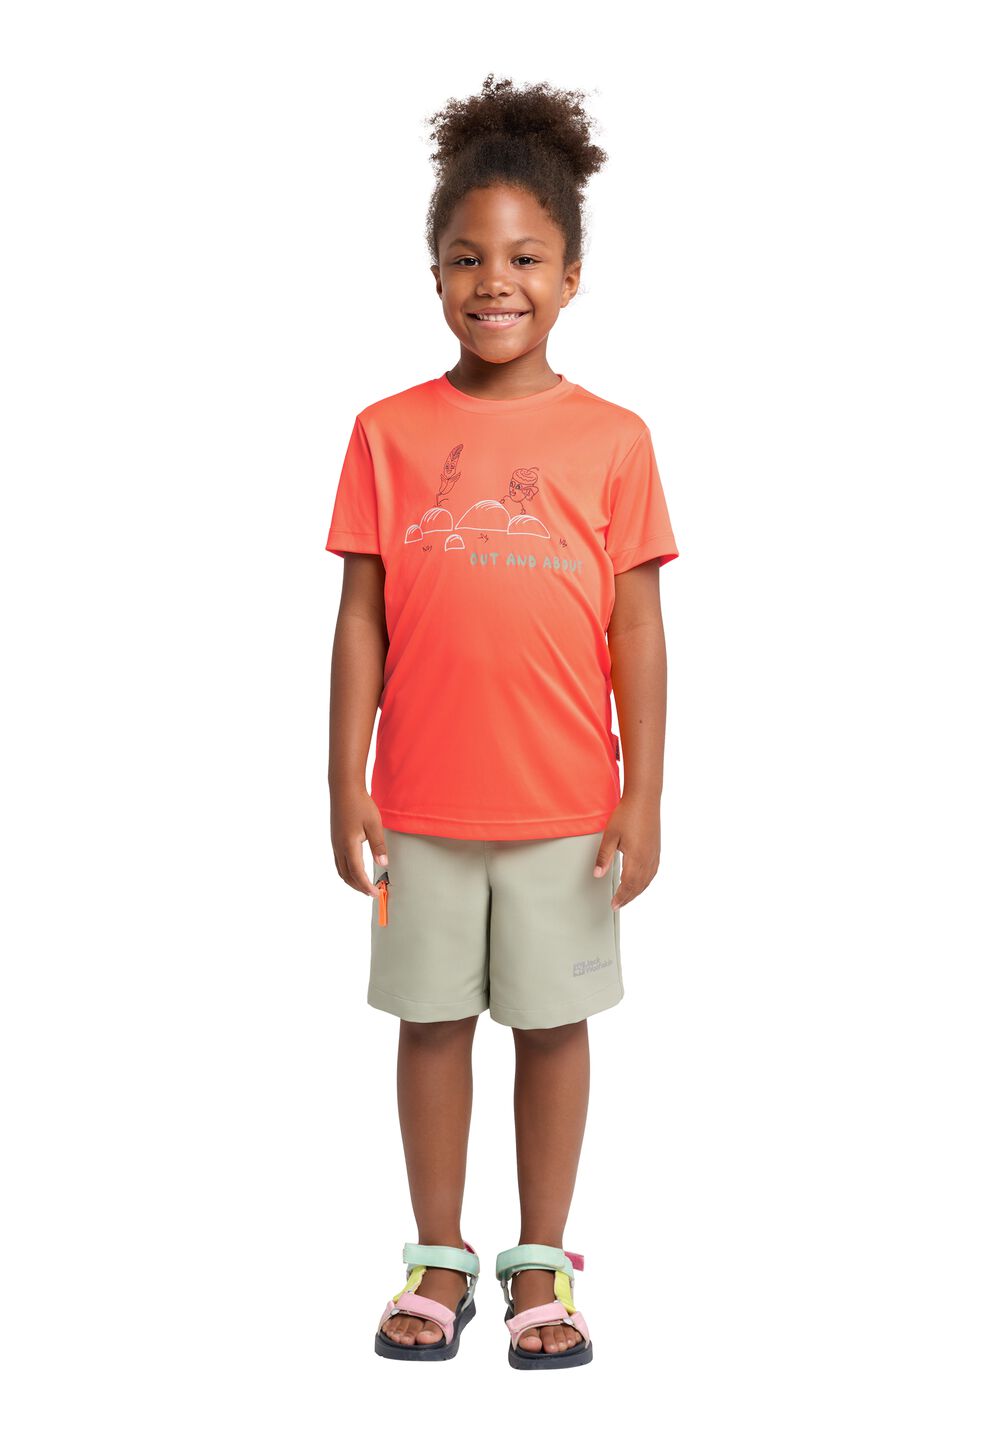 Jack Wolfskin OUT AND About T-Shirt Kids Functioneel shirt Kinderen 104 rood digital orange